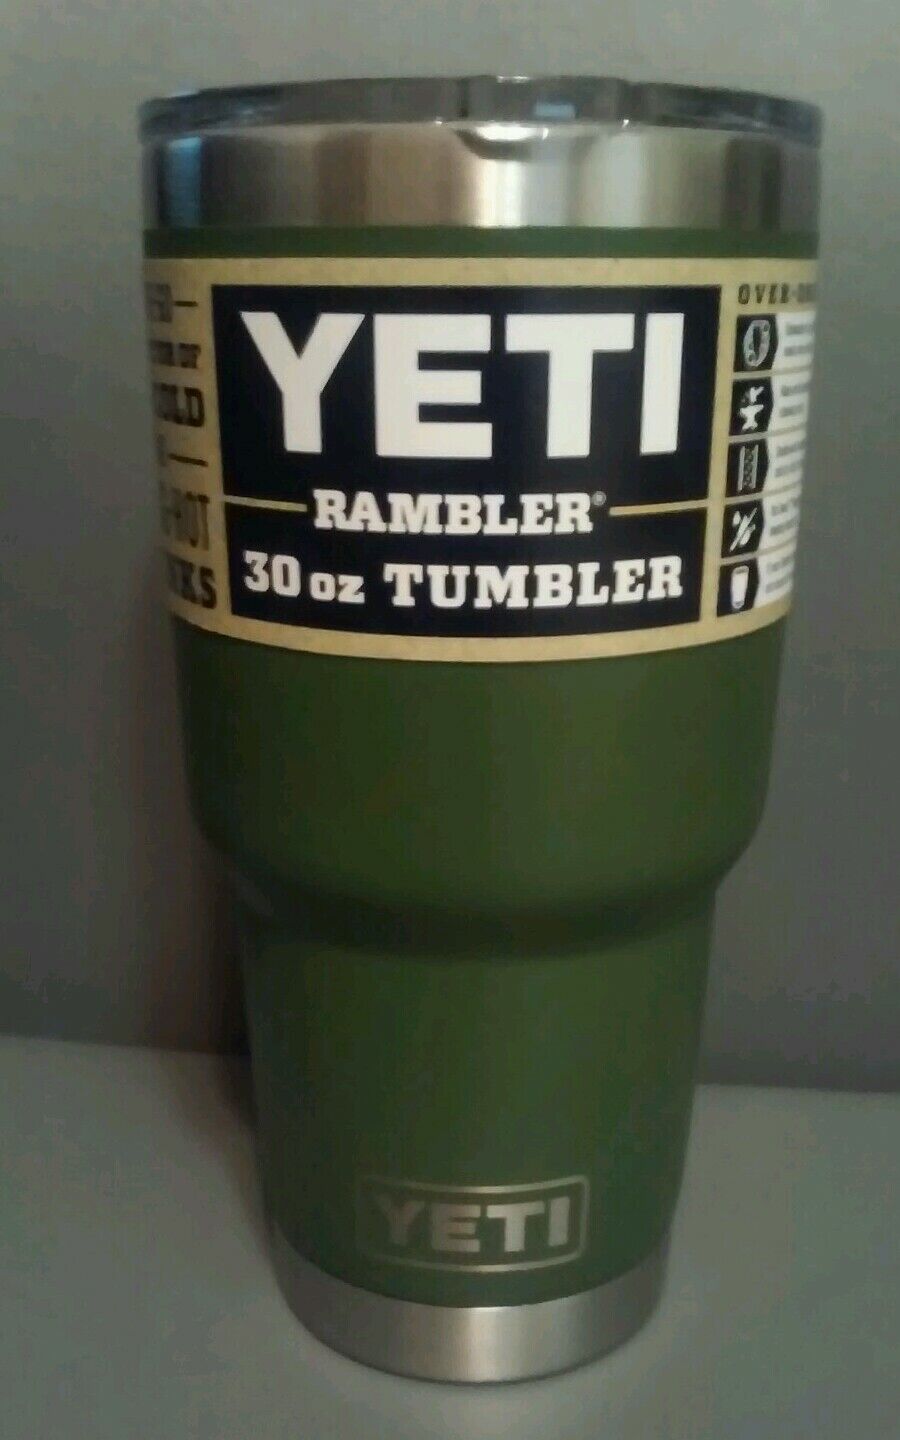 Yeti cups 5% OFF 30 tumbler SALENEW very popular oz